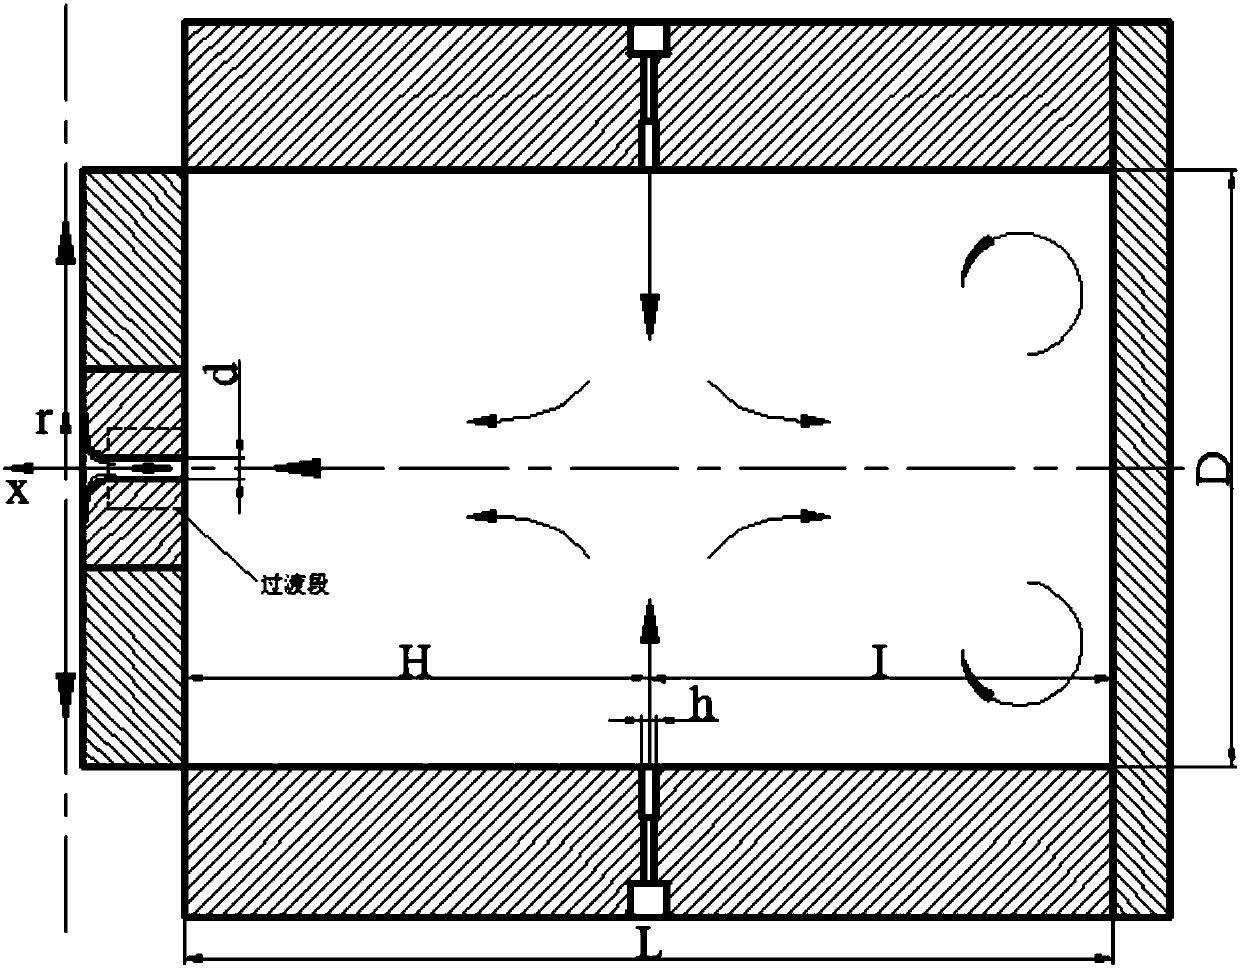 Numerical simulation method of parameter design of inner-annular-direction jet flow pressure stabilization chamber